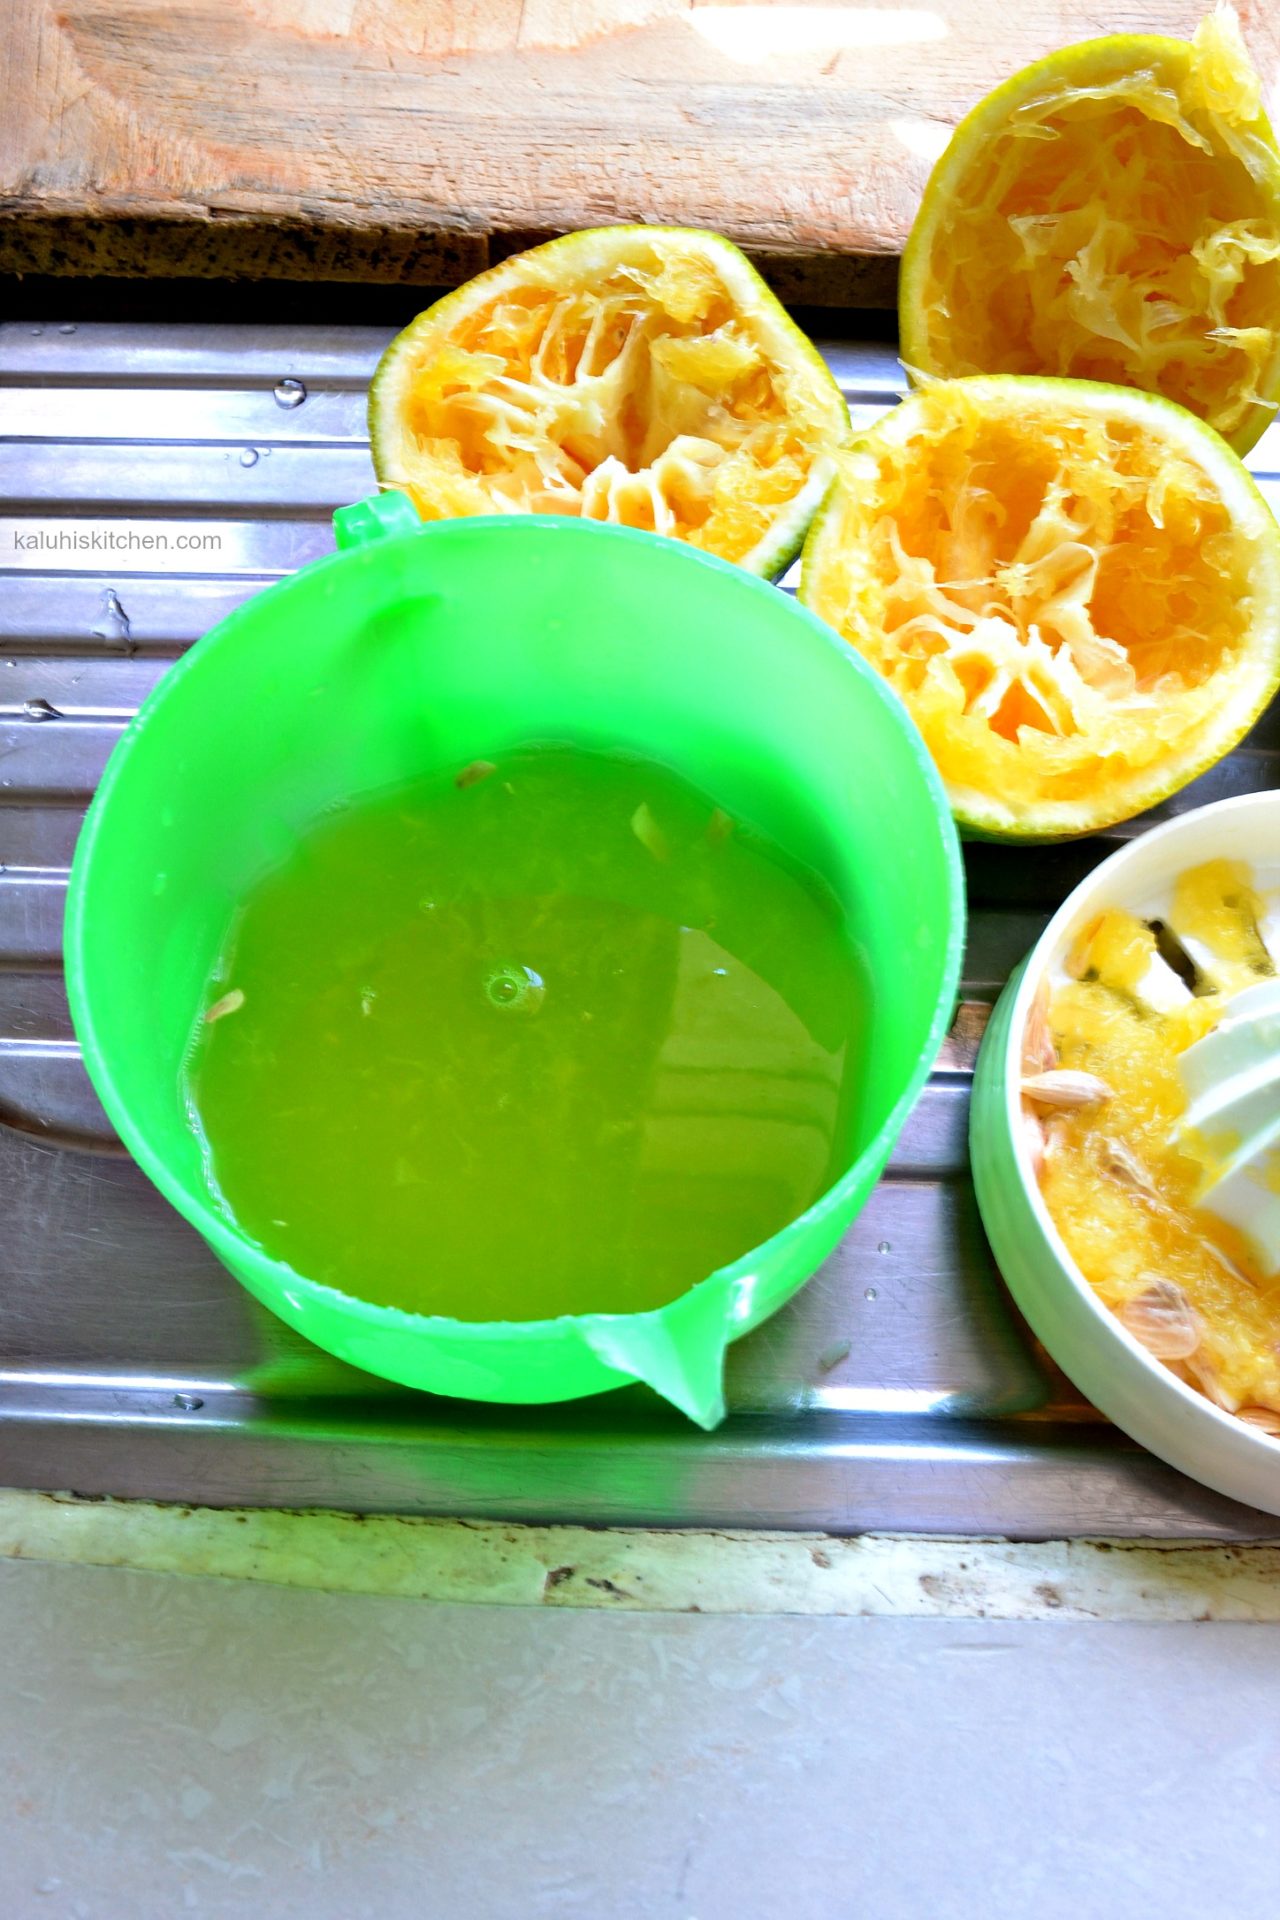 fresh orange juice is the best for making a mocktail and healthier_kaluhiskitchen.com